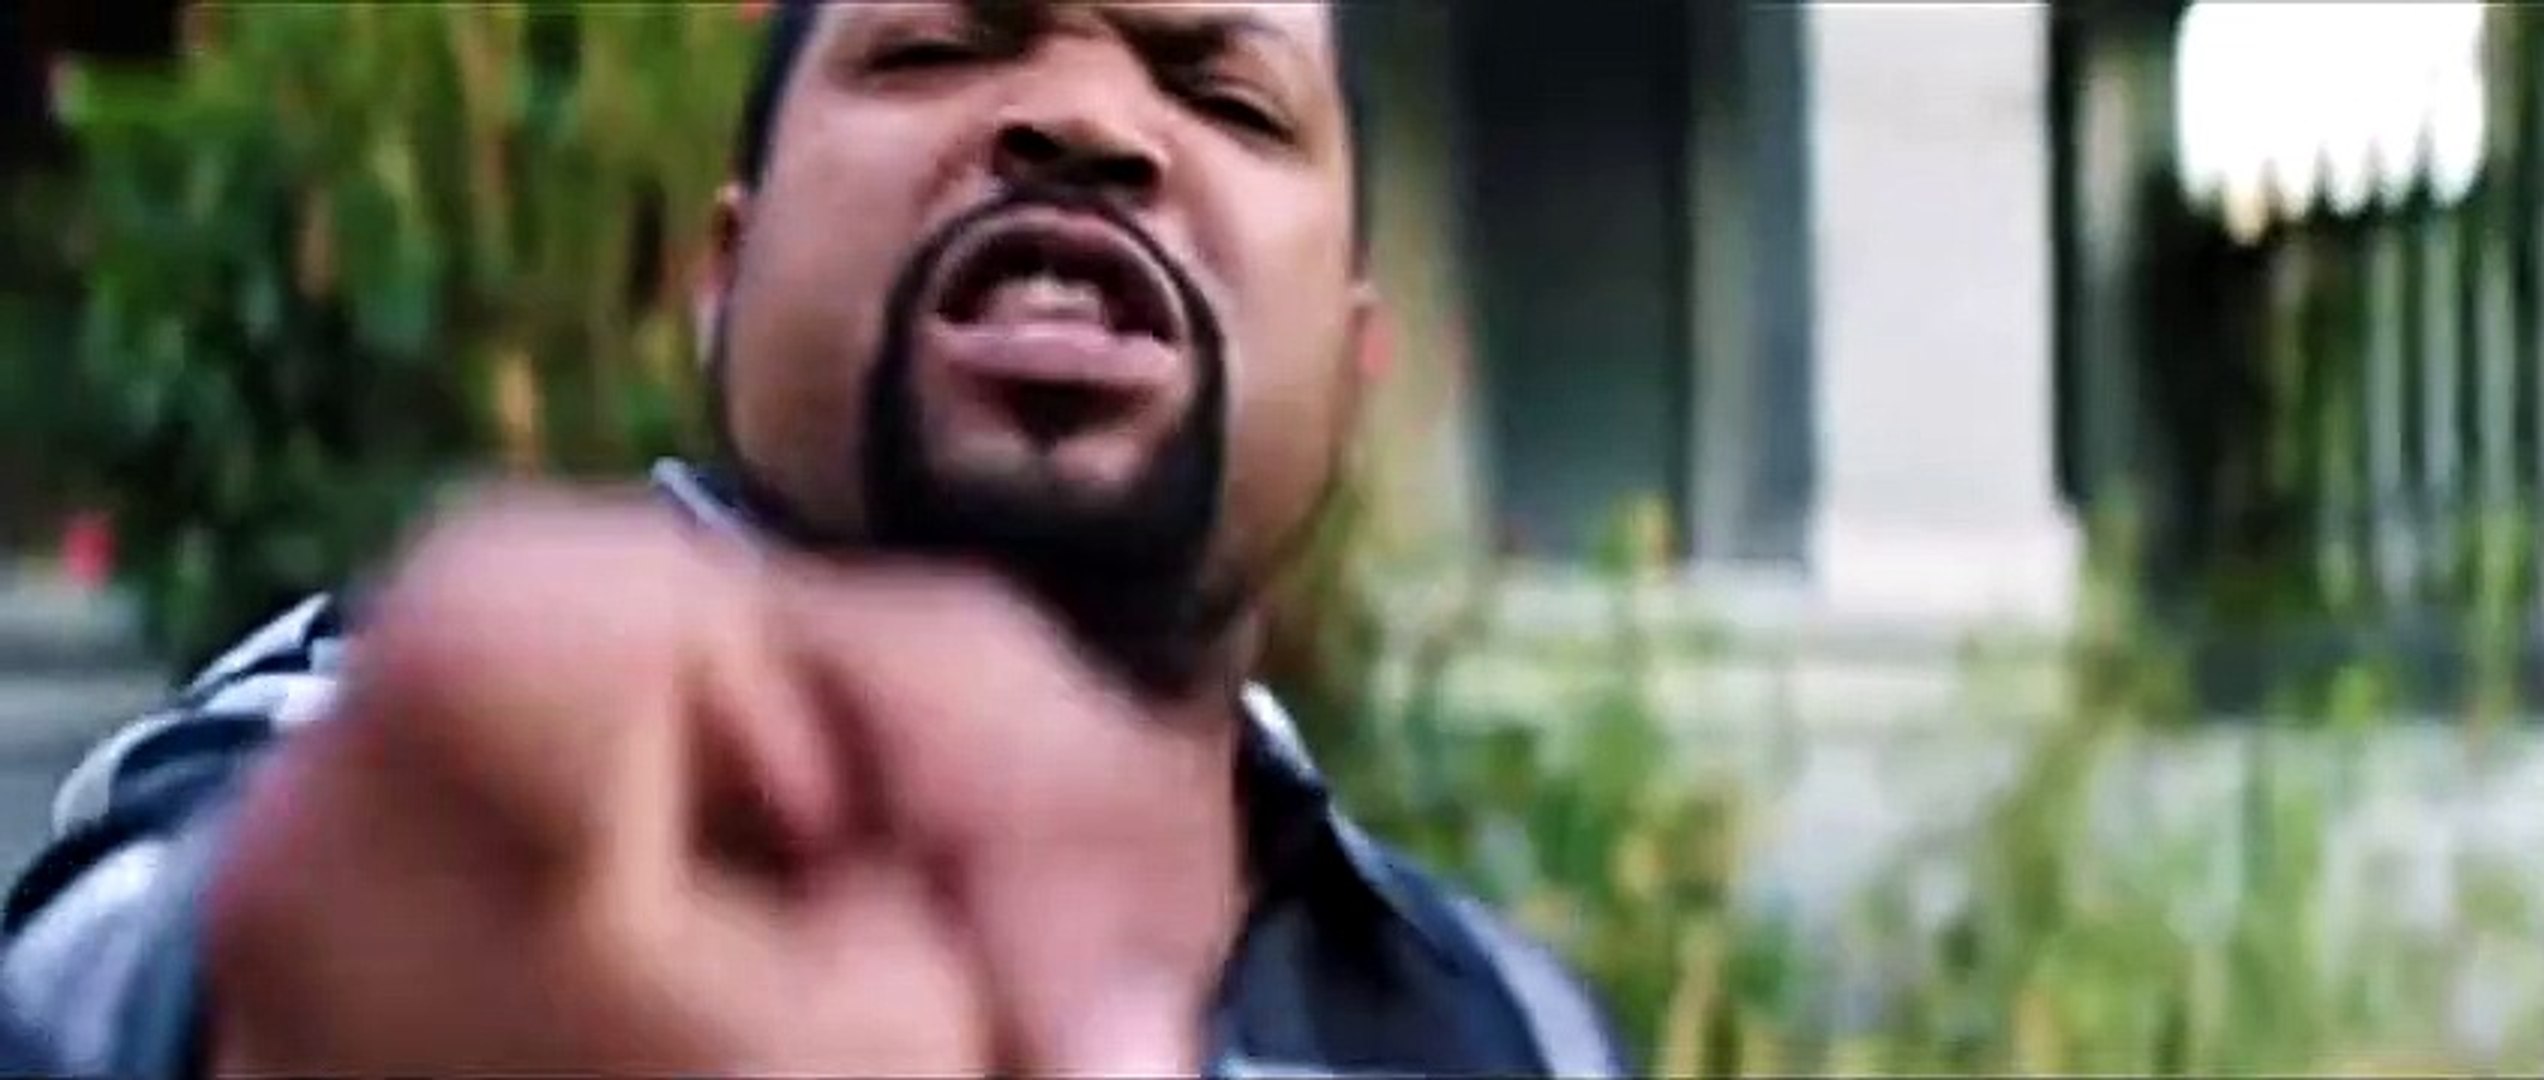 Snoop Dogg, Eminem, Dr. Dre - Back In The Game ft. DMX, Eve, Jadakiss, Ice  Cube (Official Lyrics) 